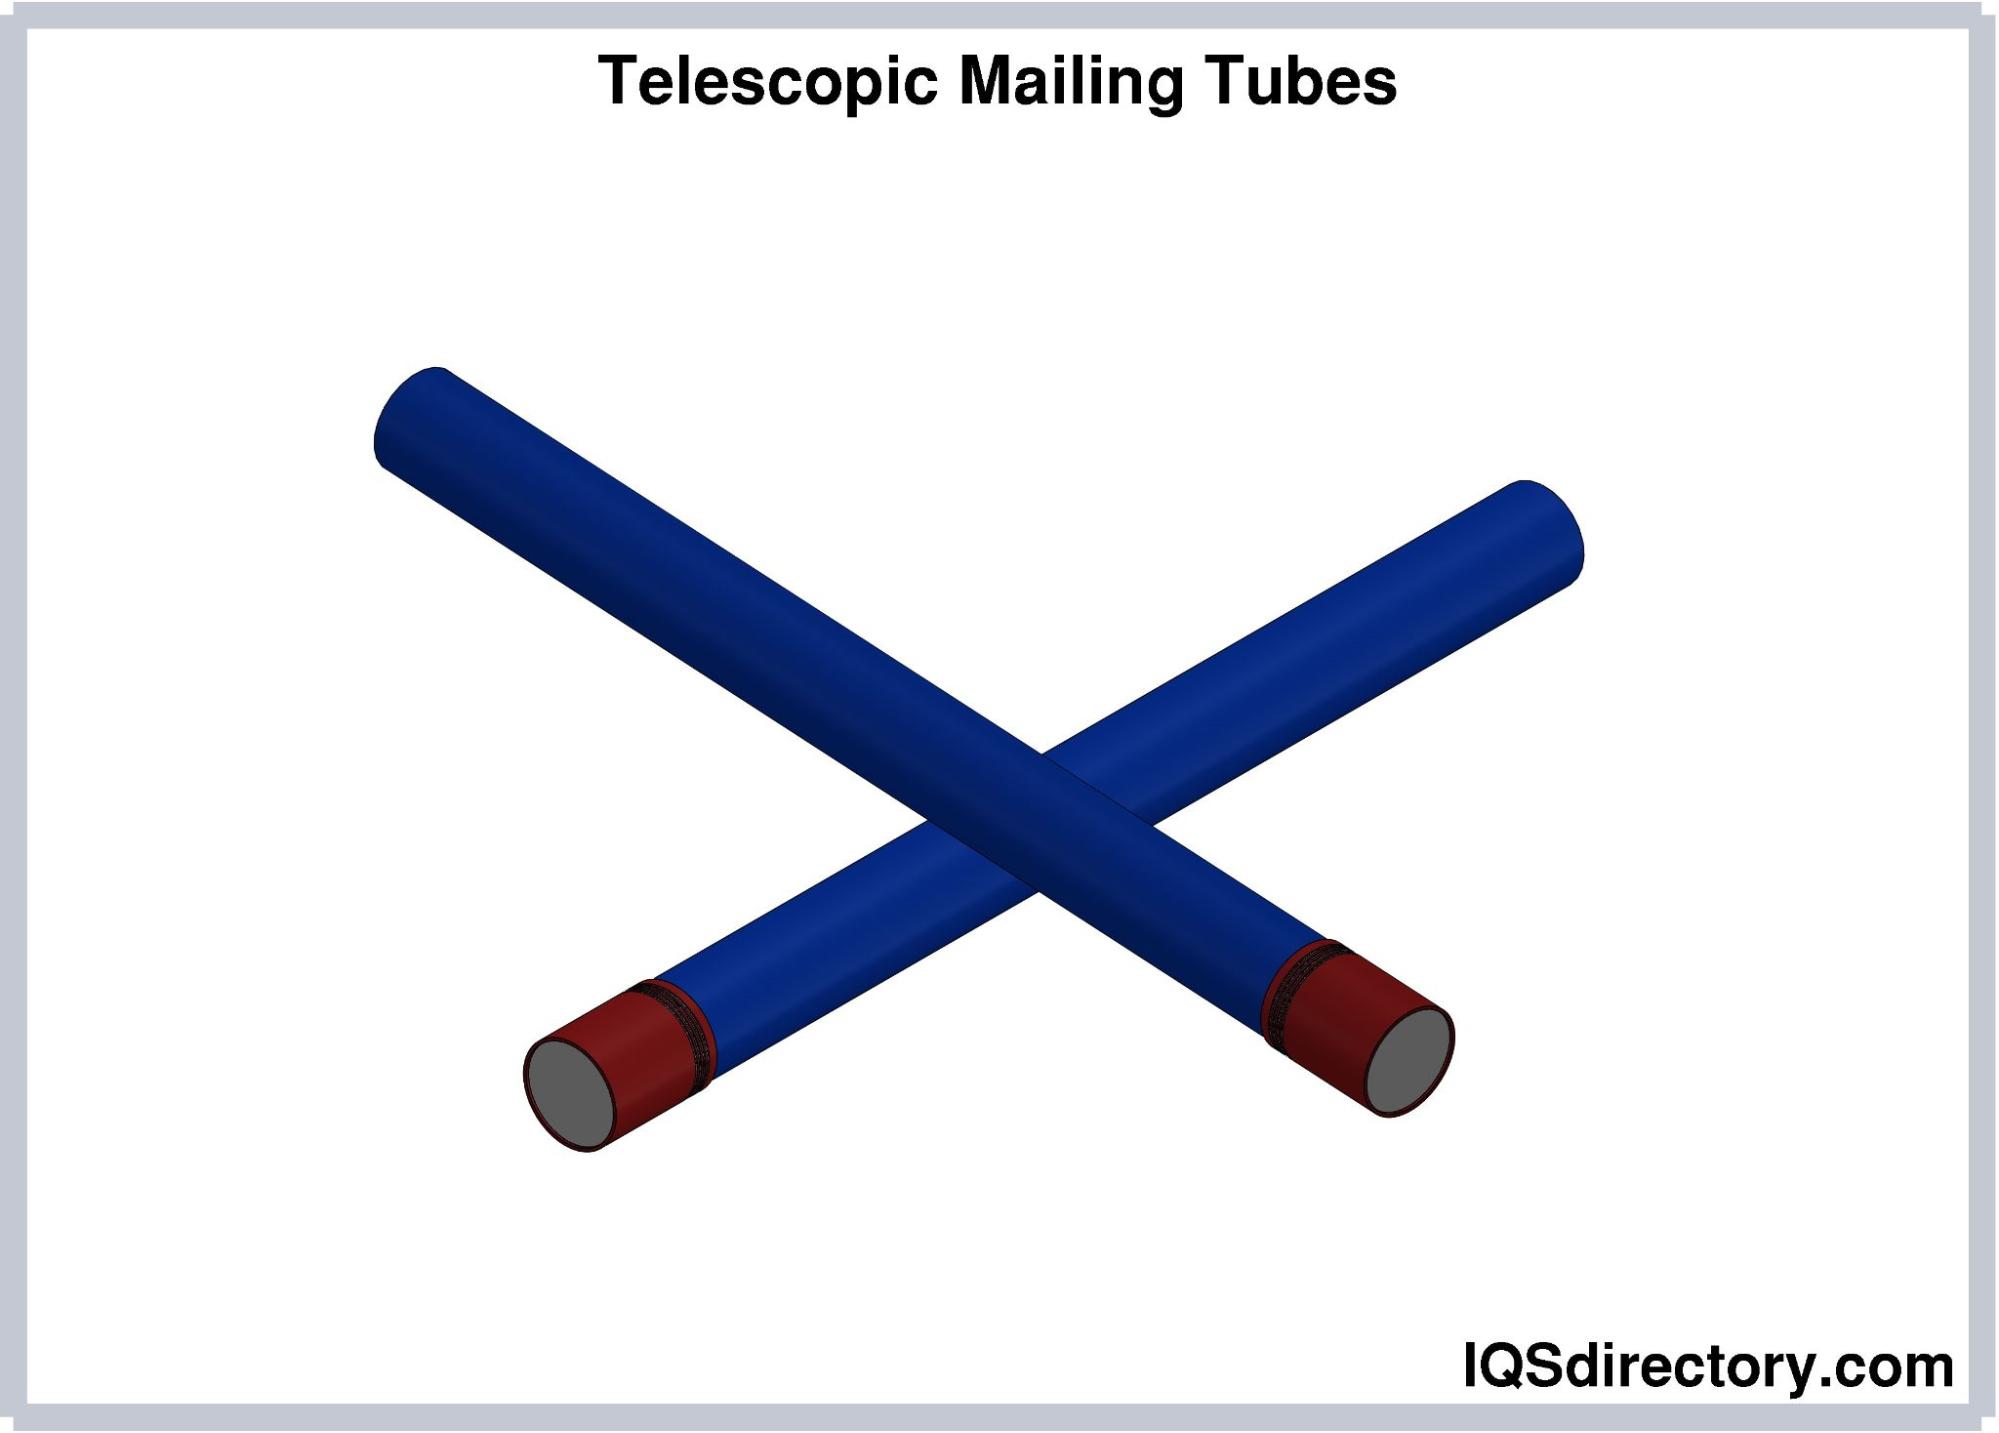 Telescopic Mailing Tubes